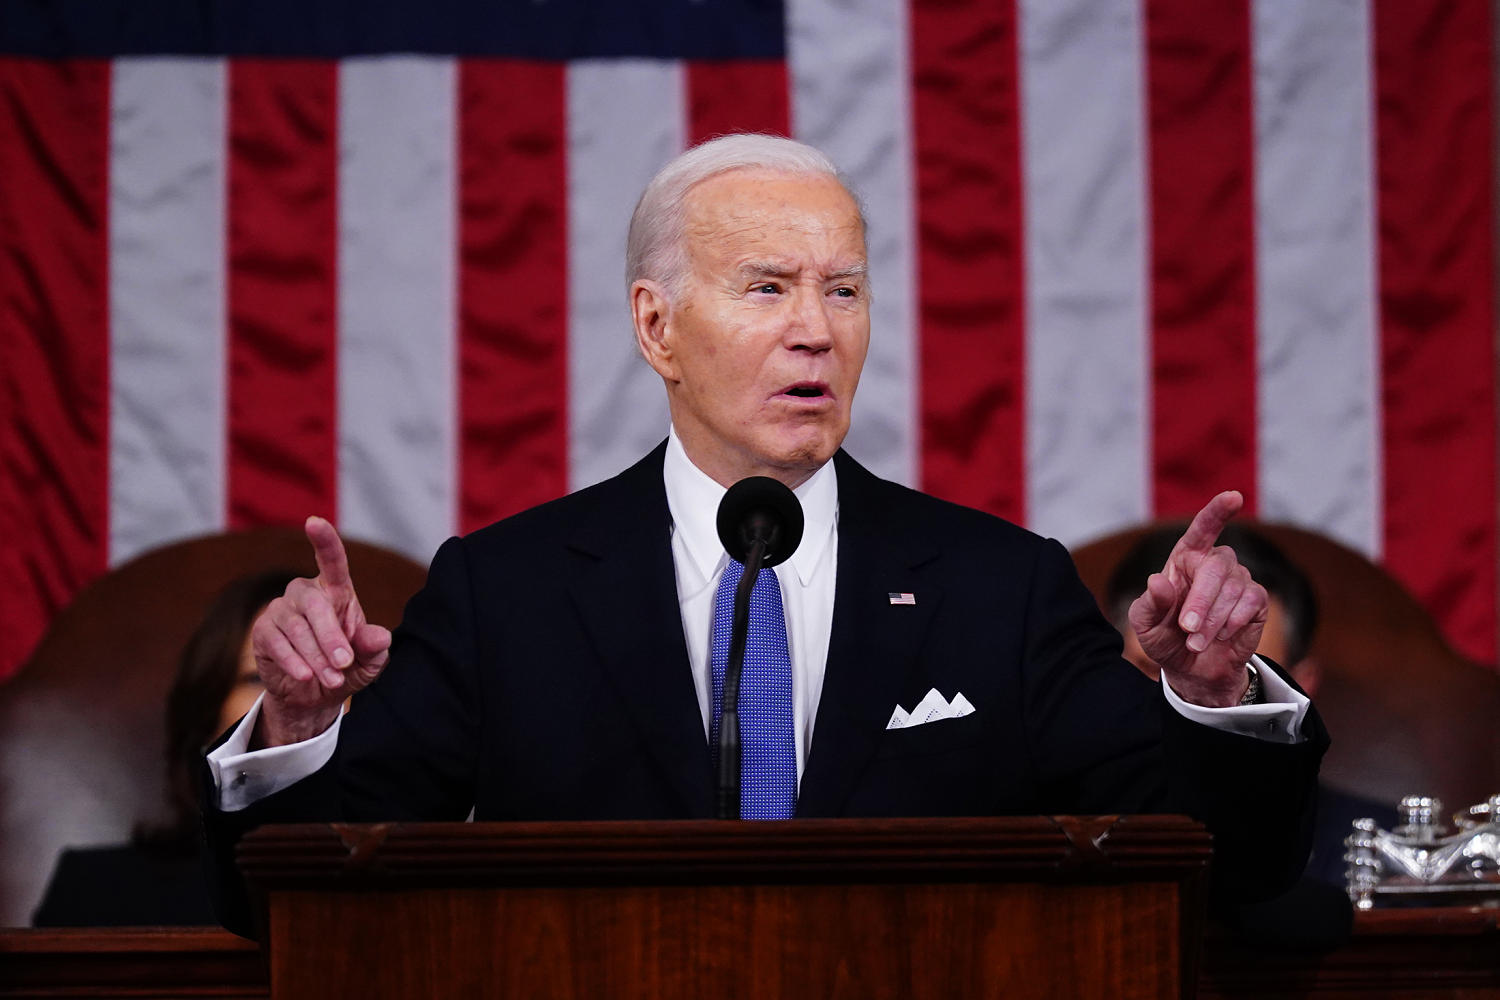 Democrats praise Biden's achievements as president, with some endorsing Harris as his successor